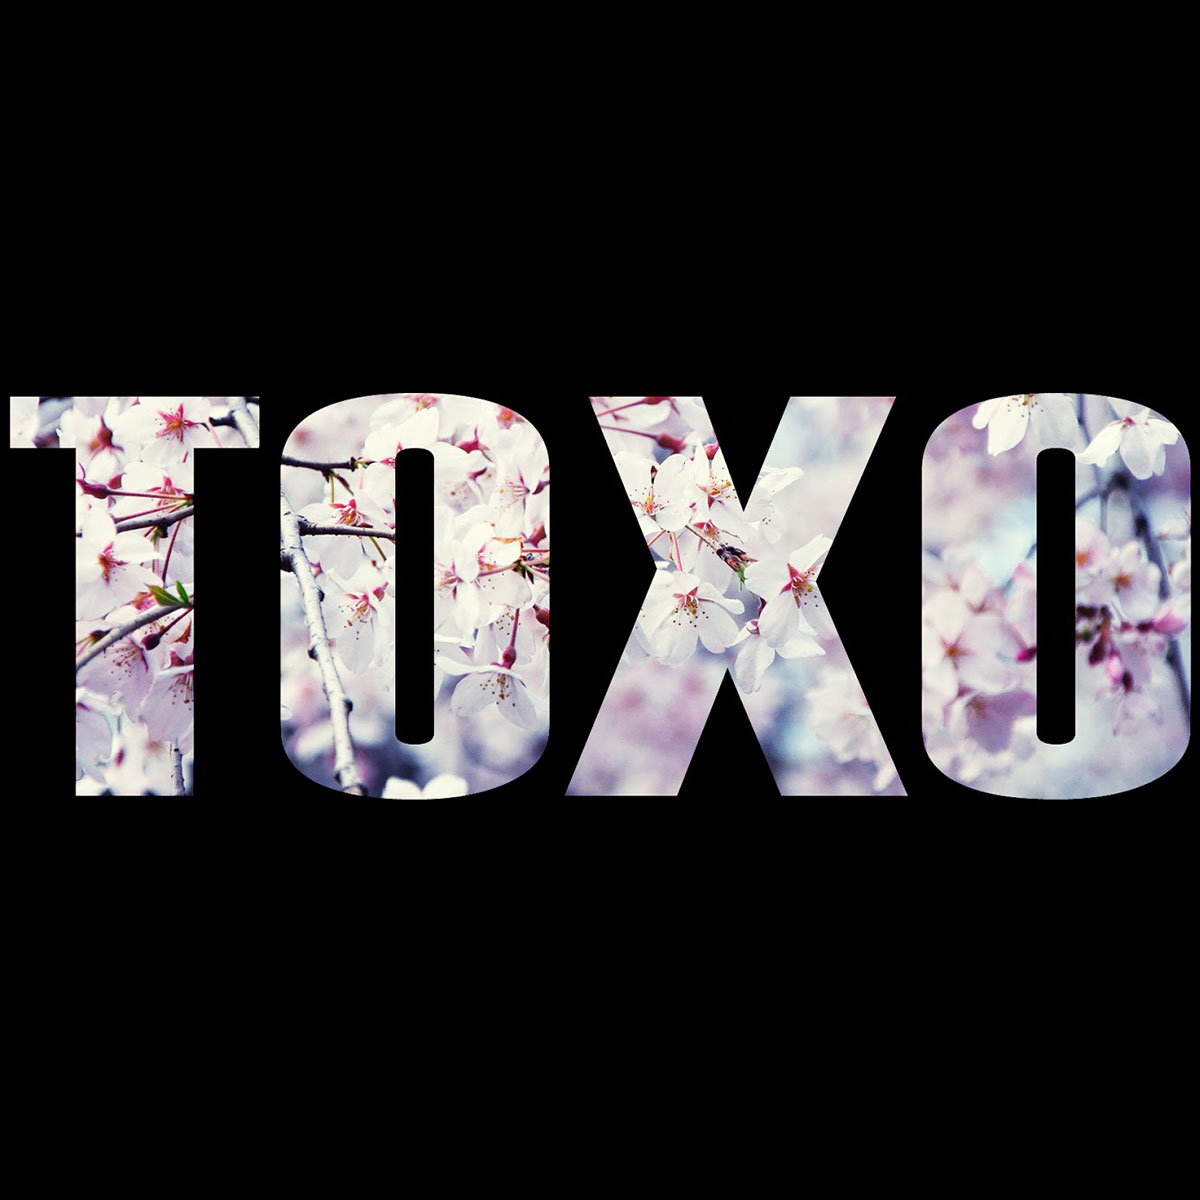 Toxo Music